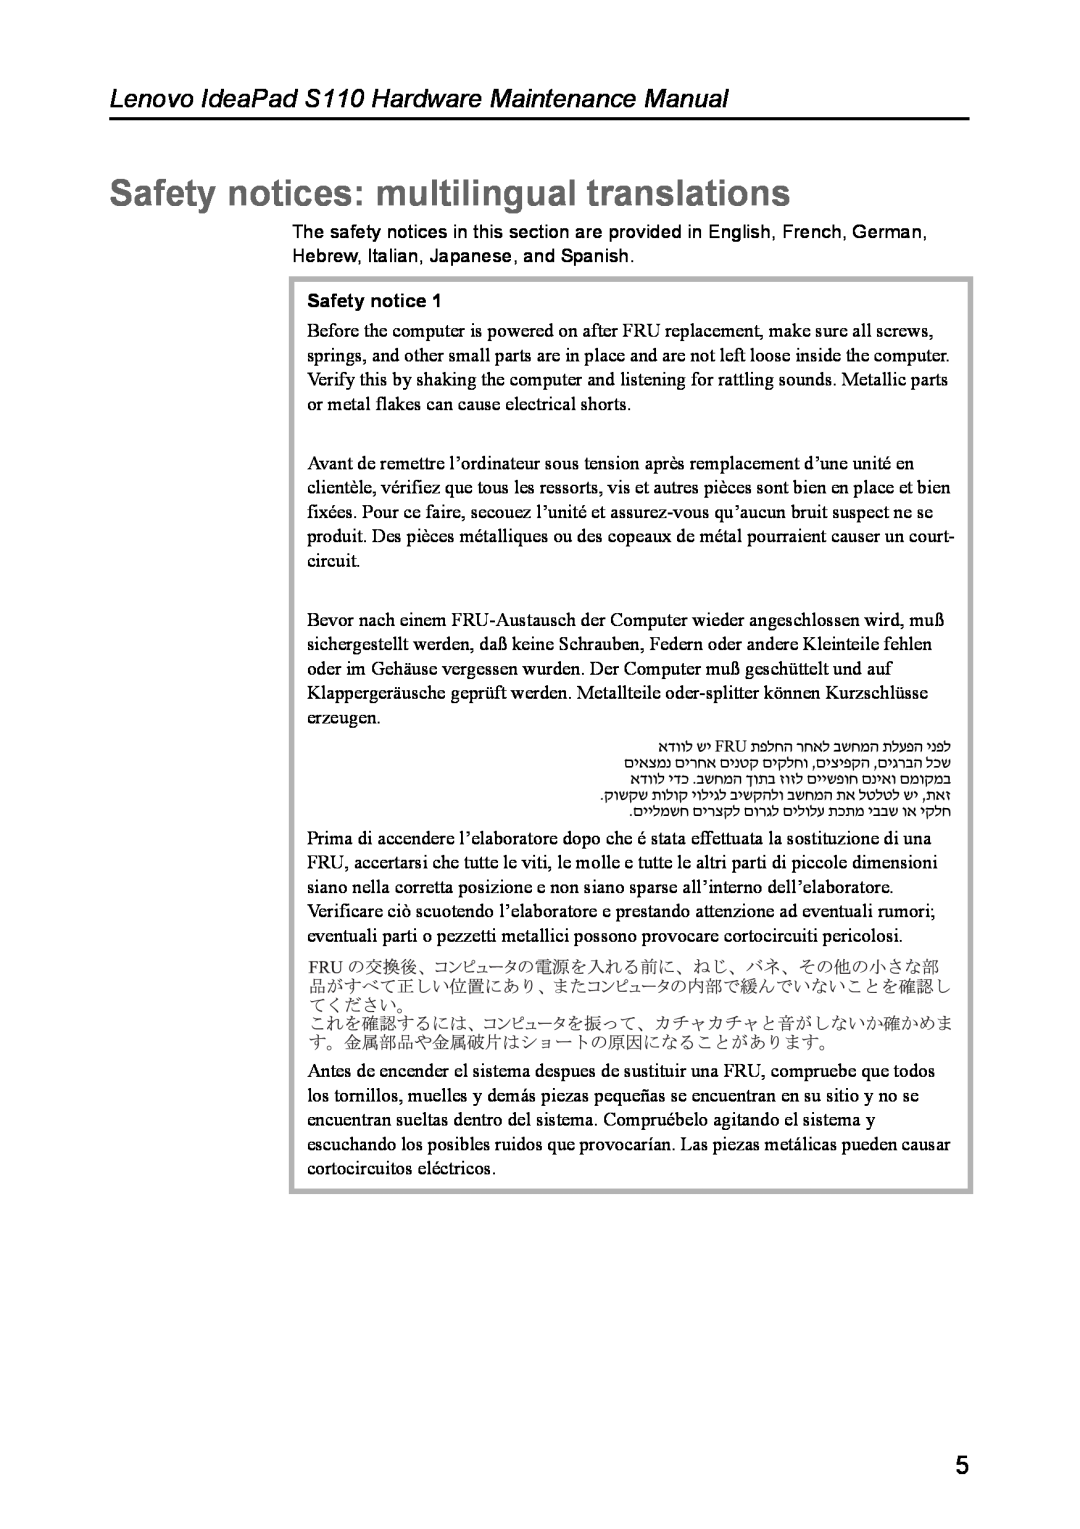 Lenovo manual Safety notices multilingual translations, Lenovo IdeaPad S110 Hardware Maintenance Manual 